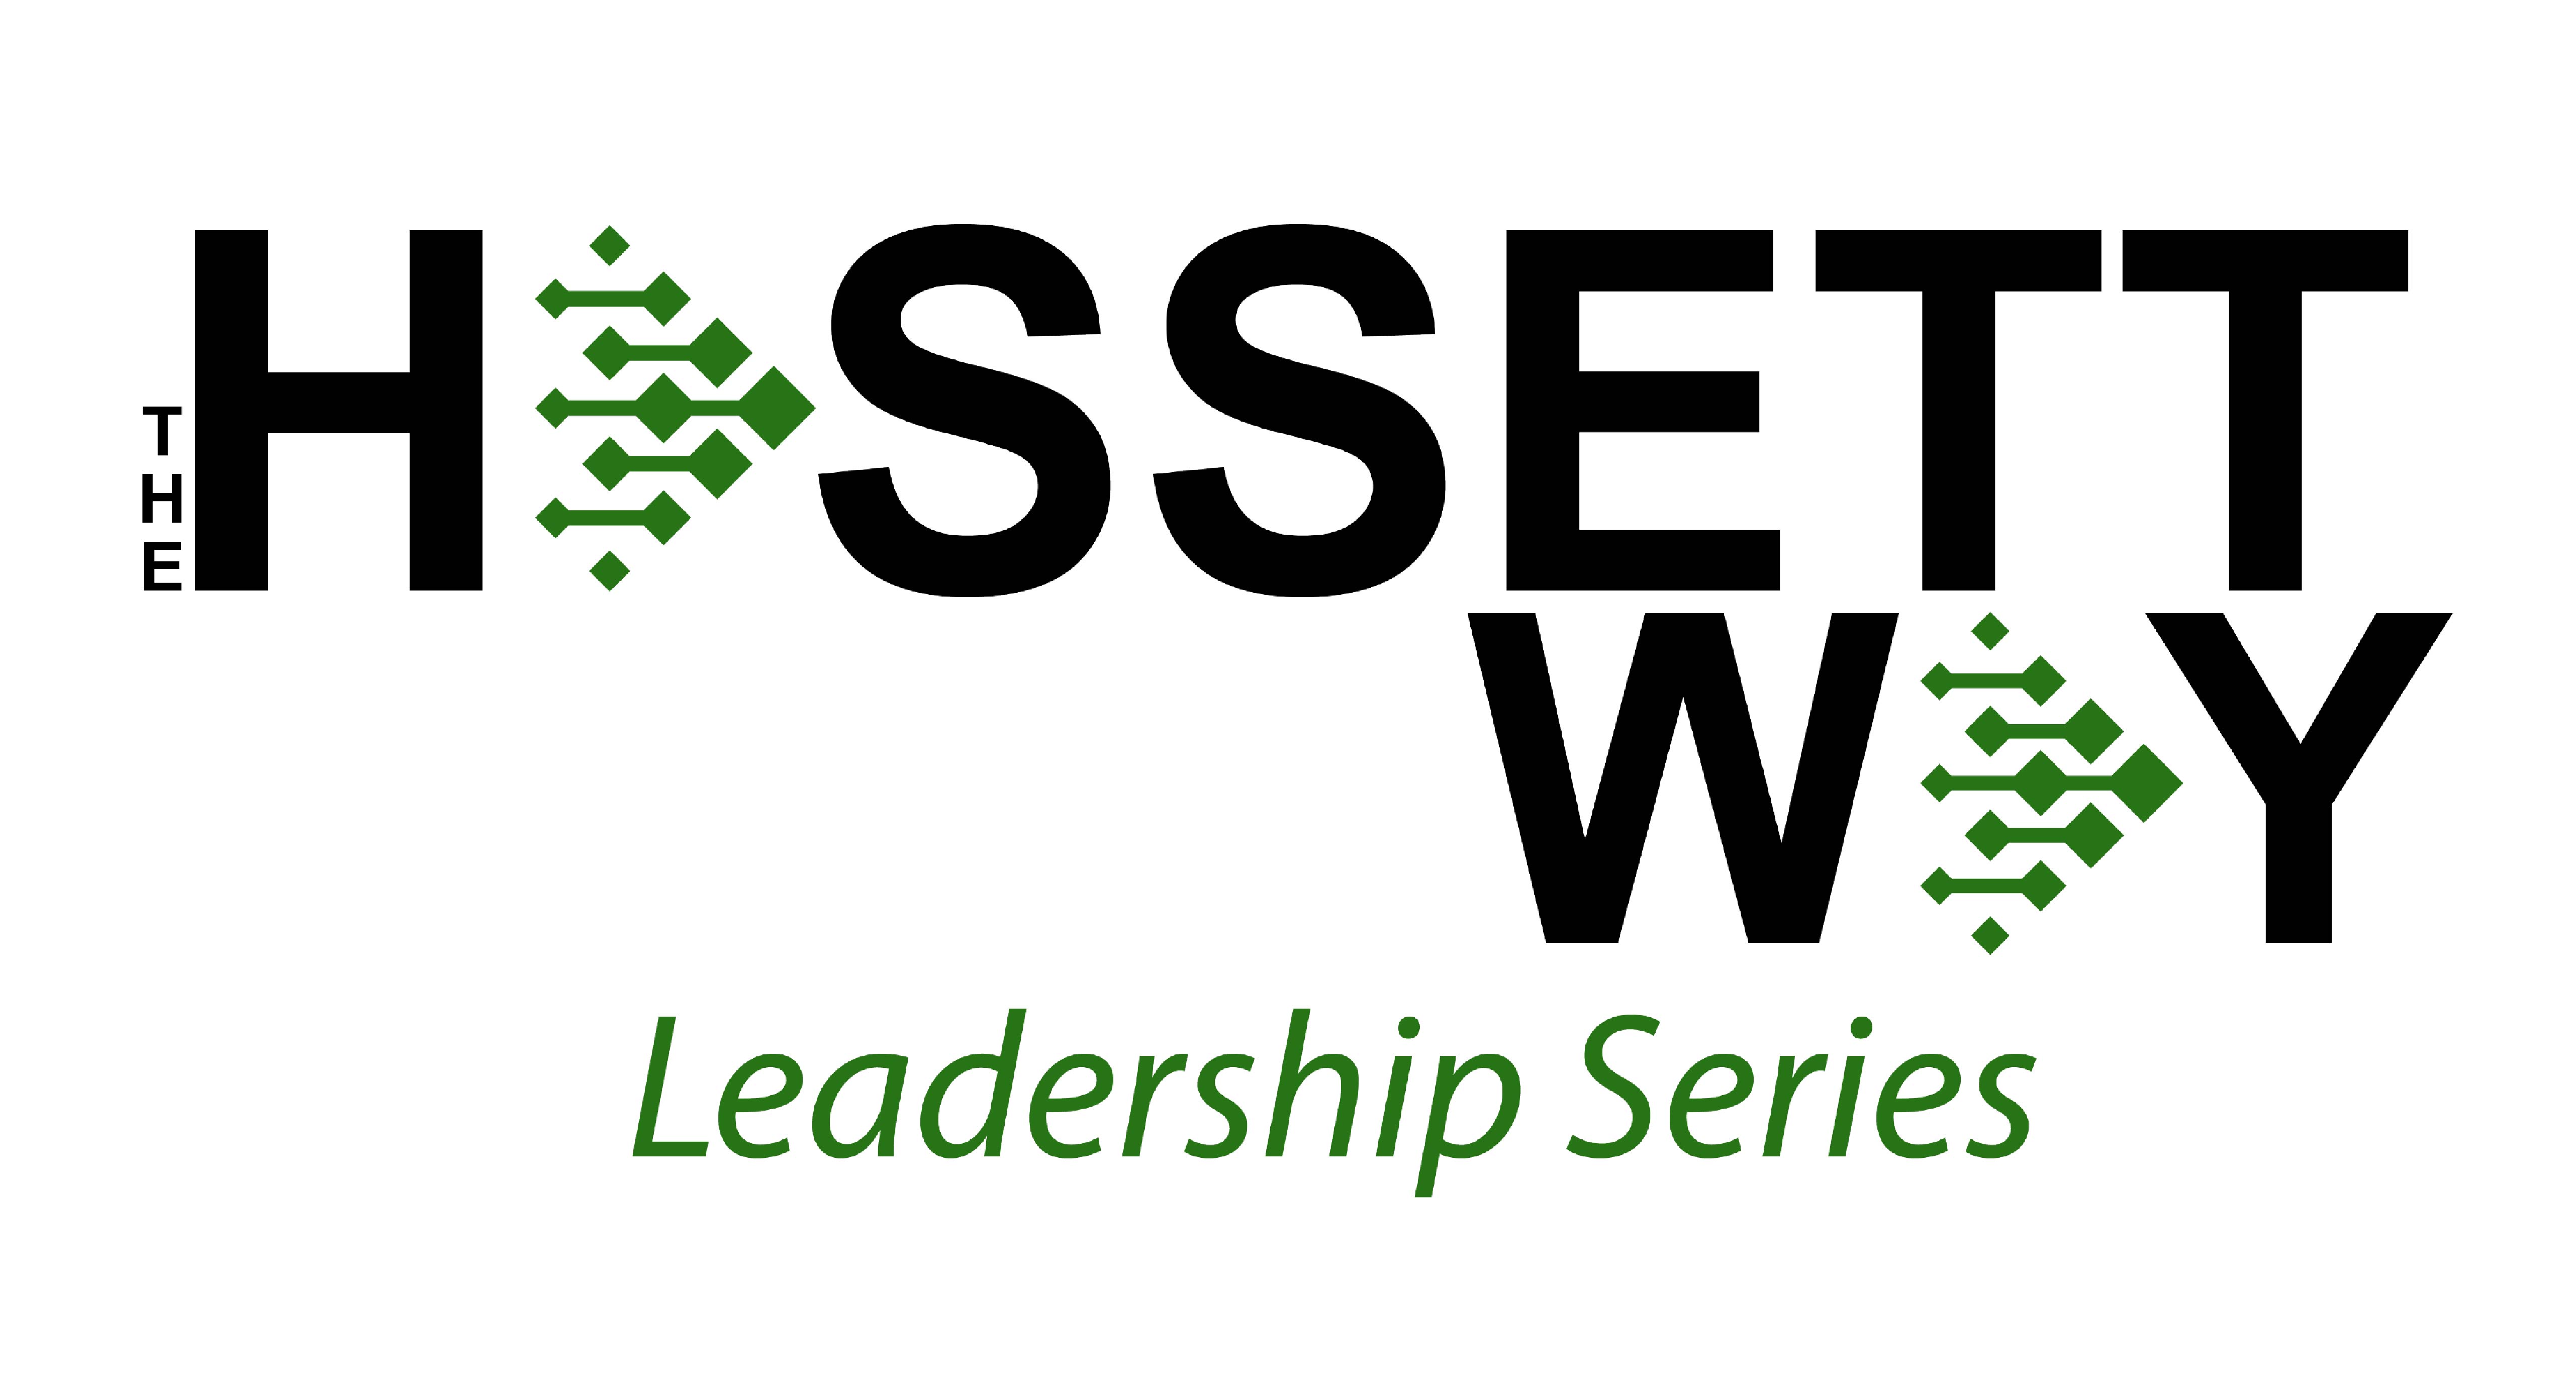 The Hassett Way Leadership Series